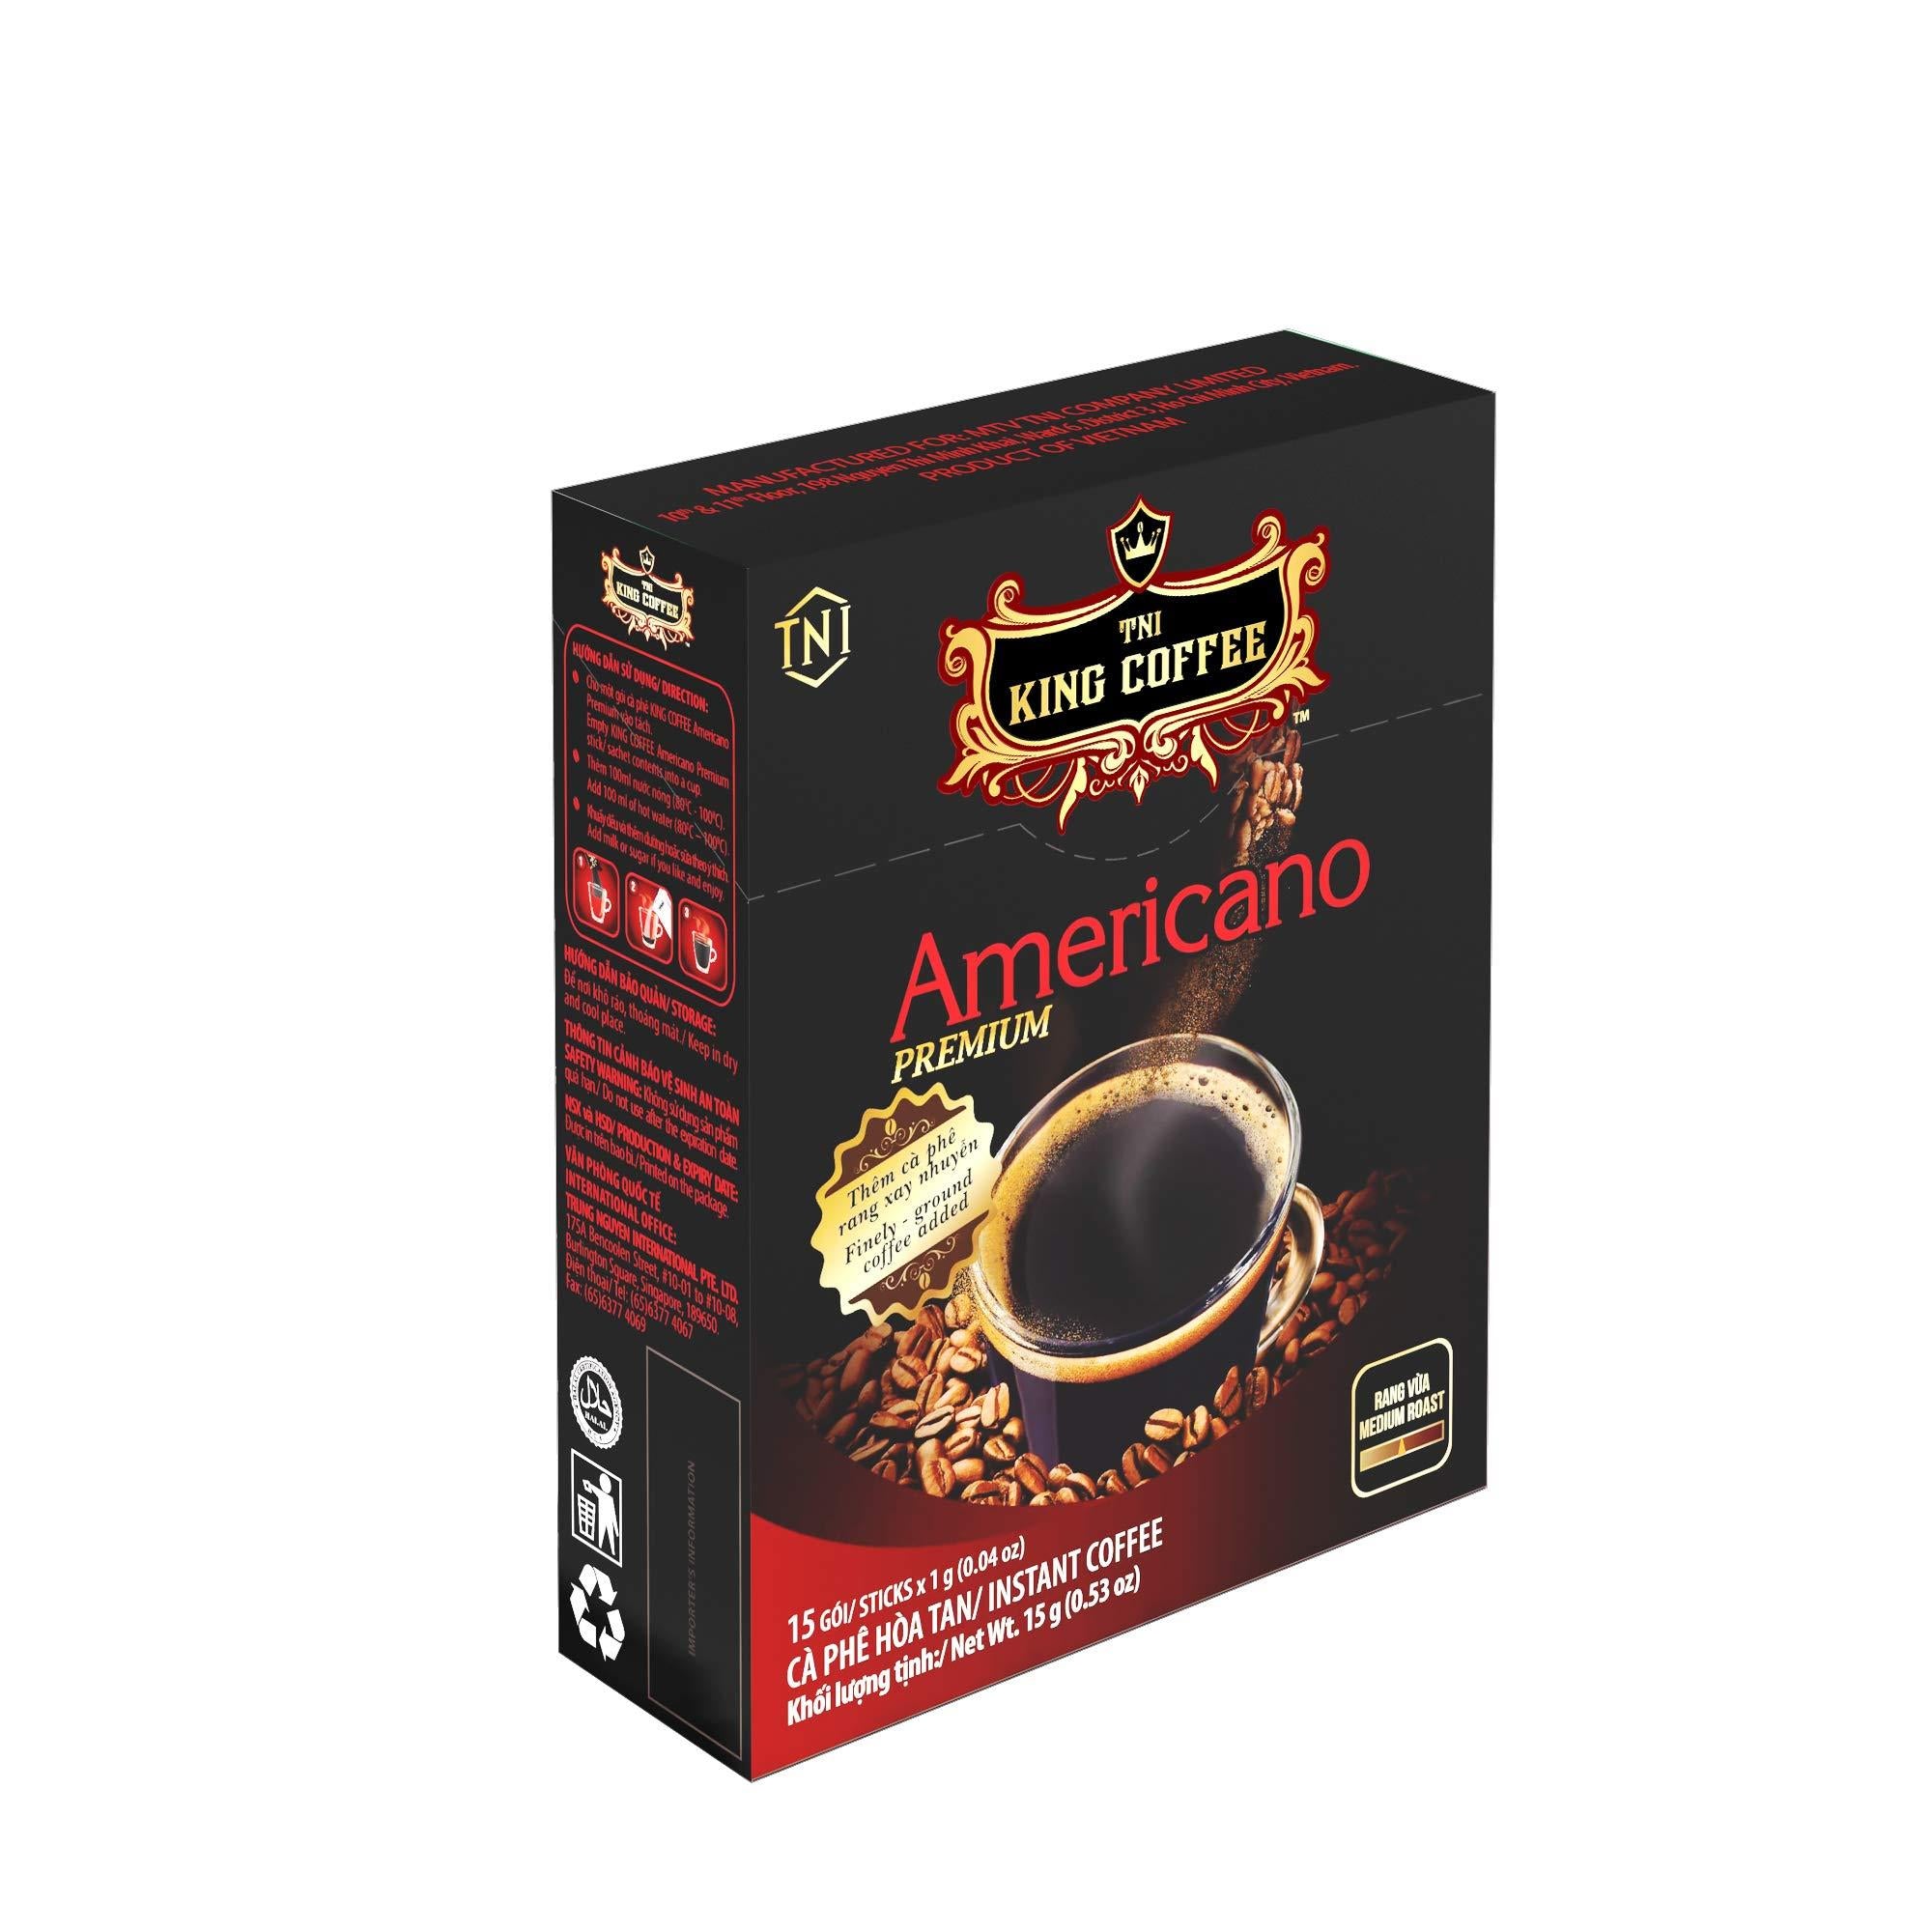 TNI King Coffee Americano Premium, Medium Roast Vietnamese Coffee, Finely-ground, Mild acidity, 15 sticks x 1g (0.04oz), Pack of 1